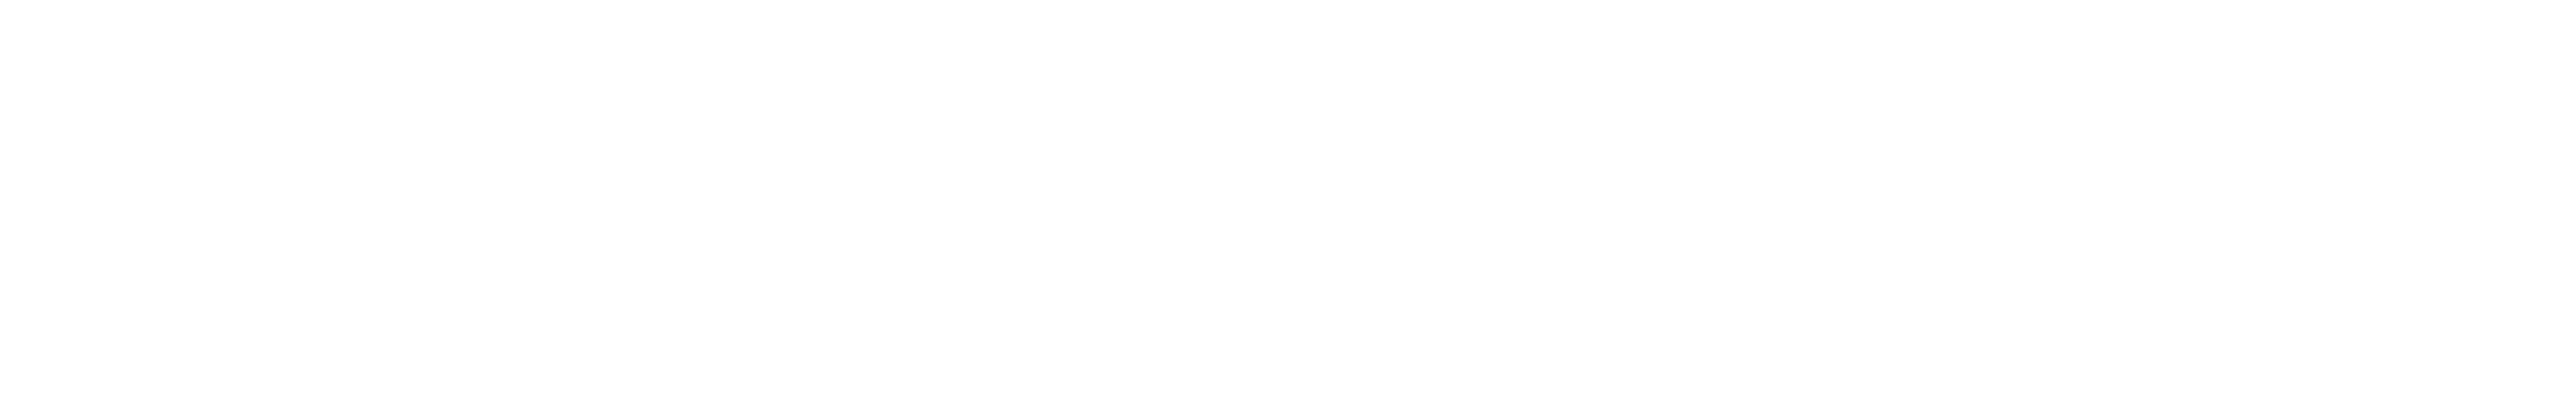 Pandit Sunderlal Sharma Central Institute of Vocational Education, Bhopal